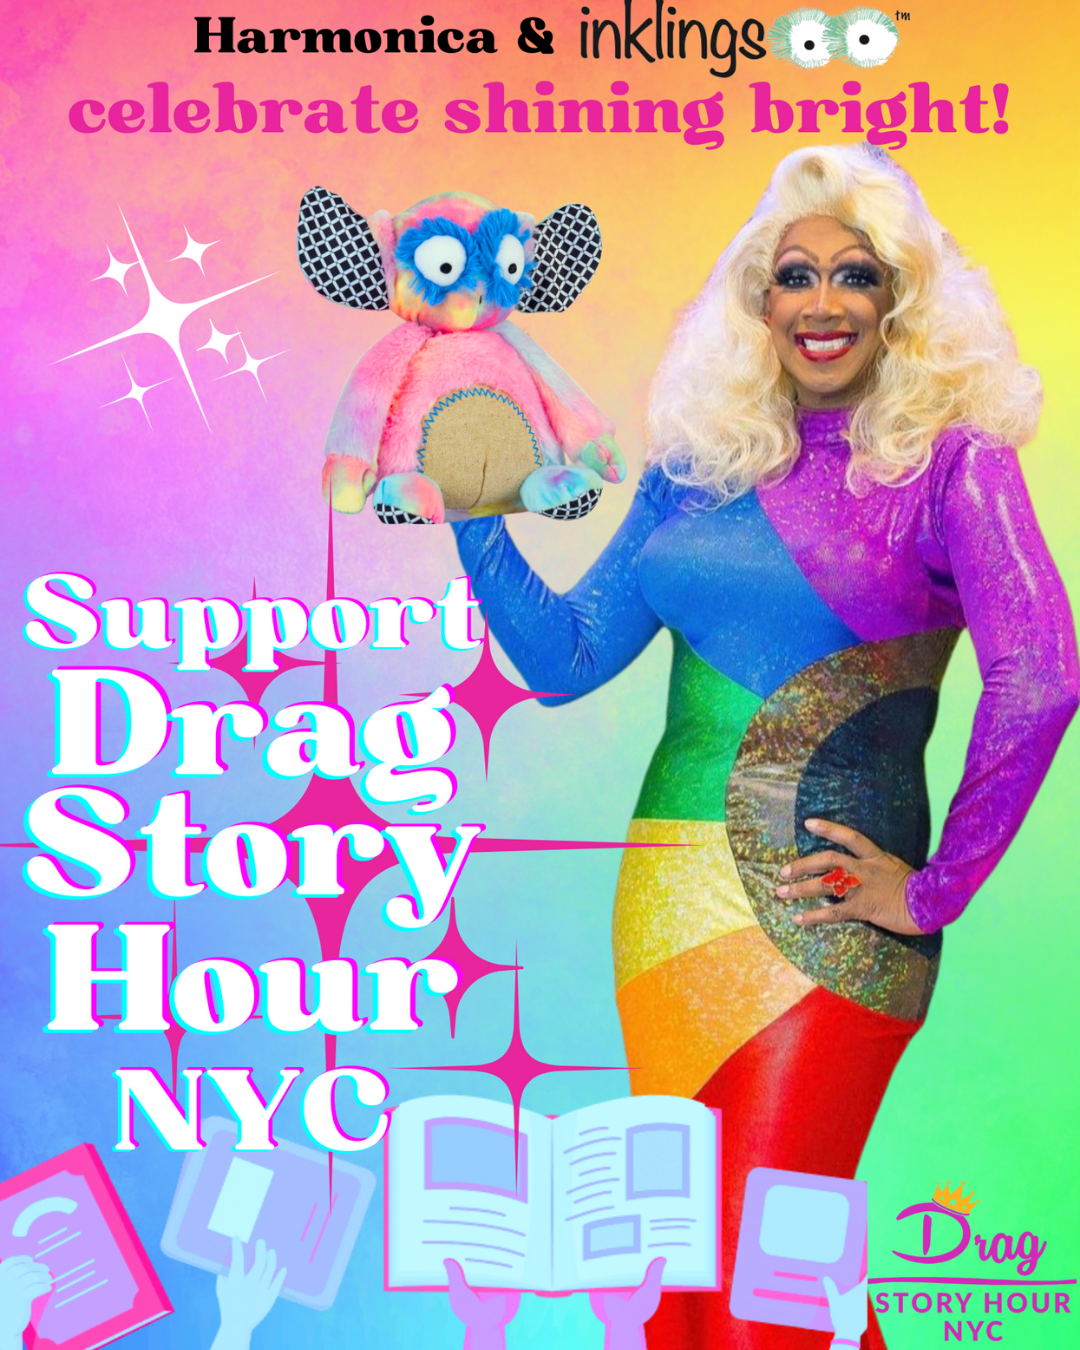 Inklings x Drag Story Hour NYC